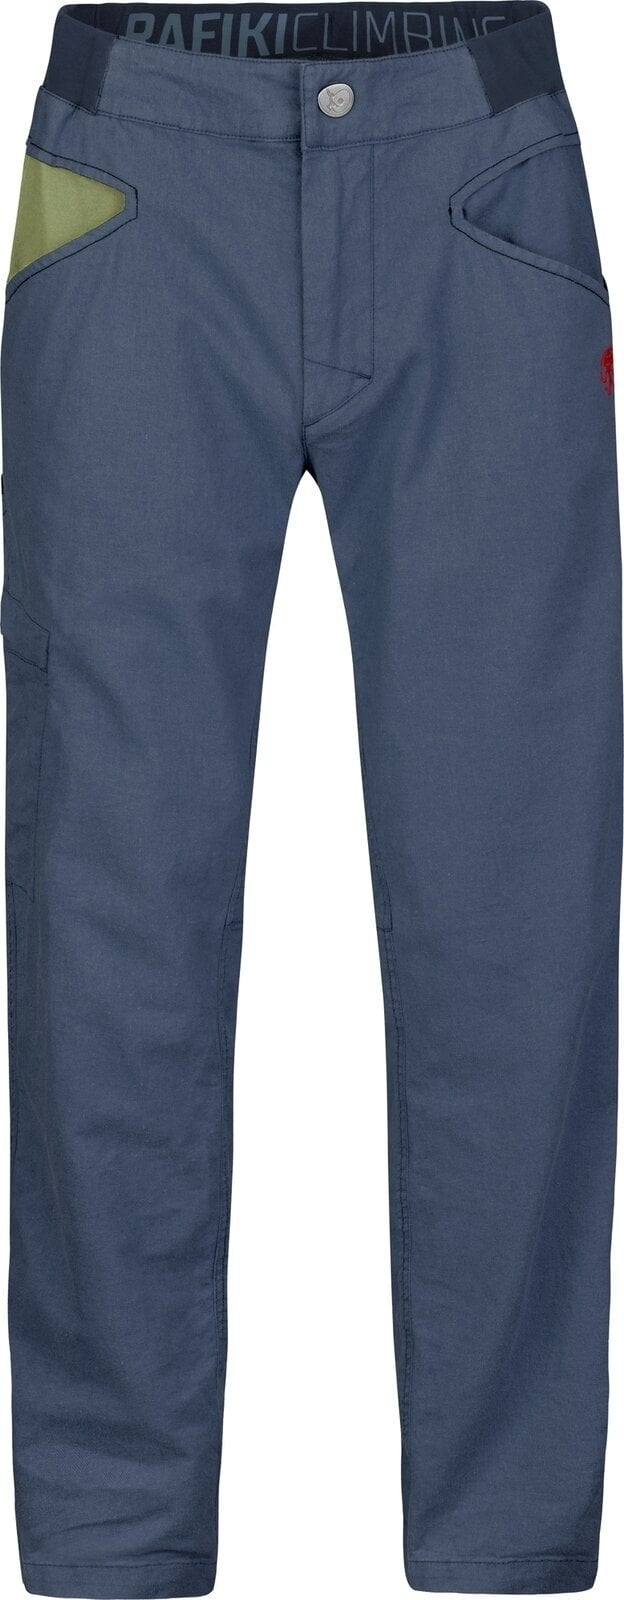 Pantaloni Rafiki Grip Man Pants India Ink XL Pantaloni